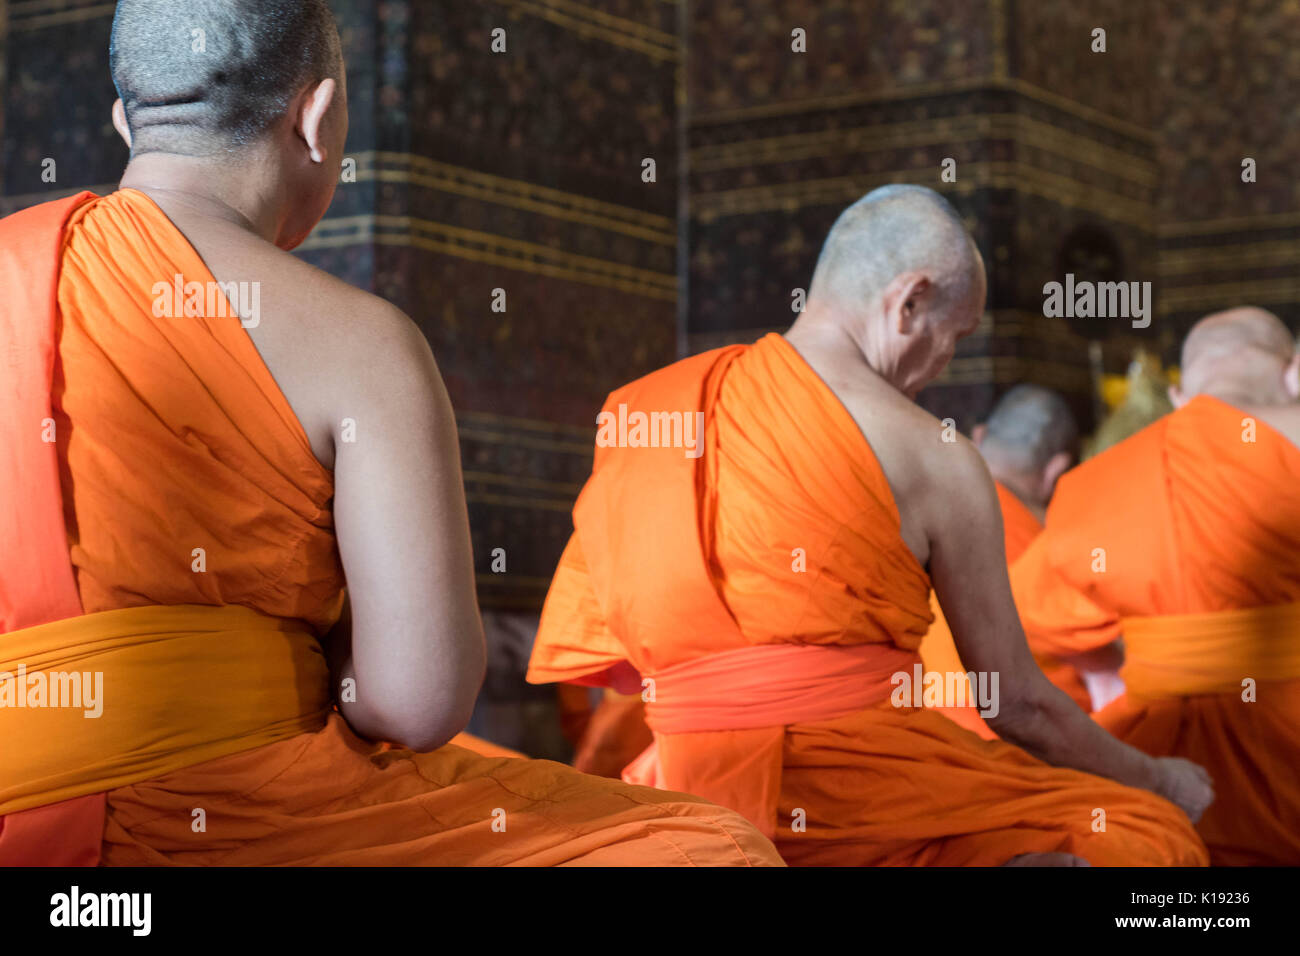 Buddhists praying, Bangkok (Thailand) Stock Photo